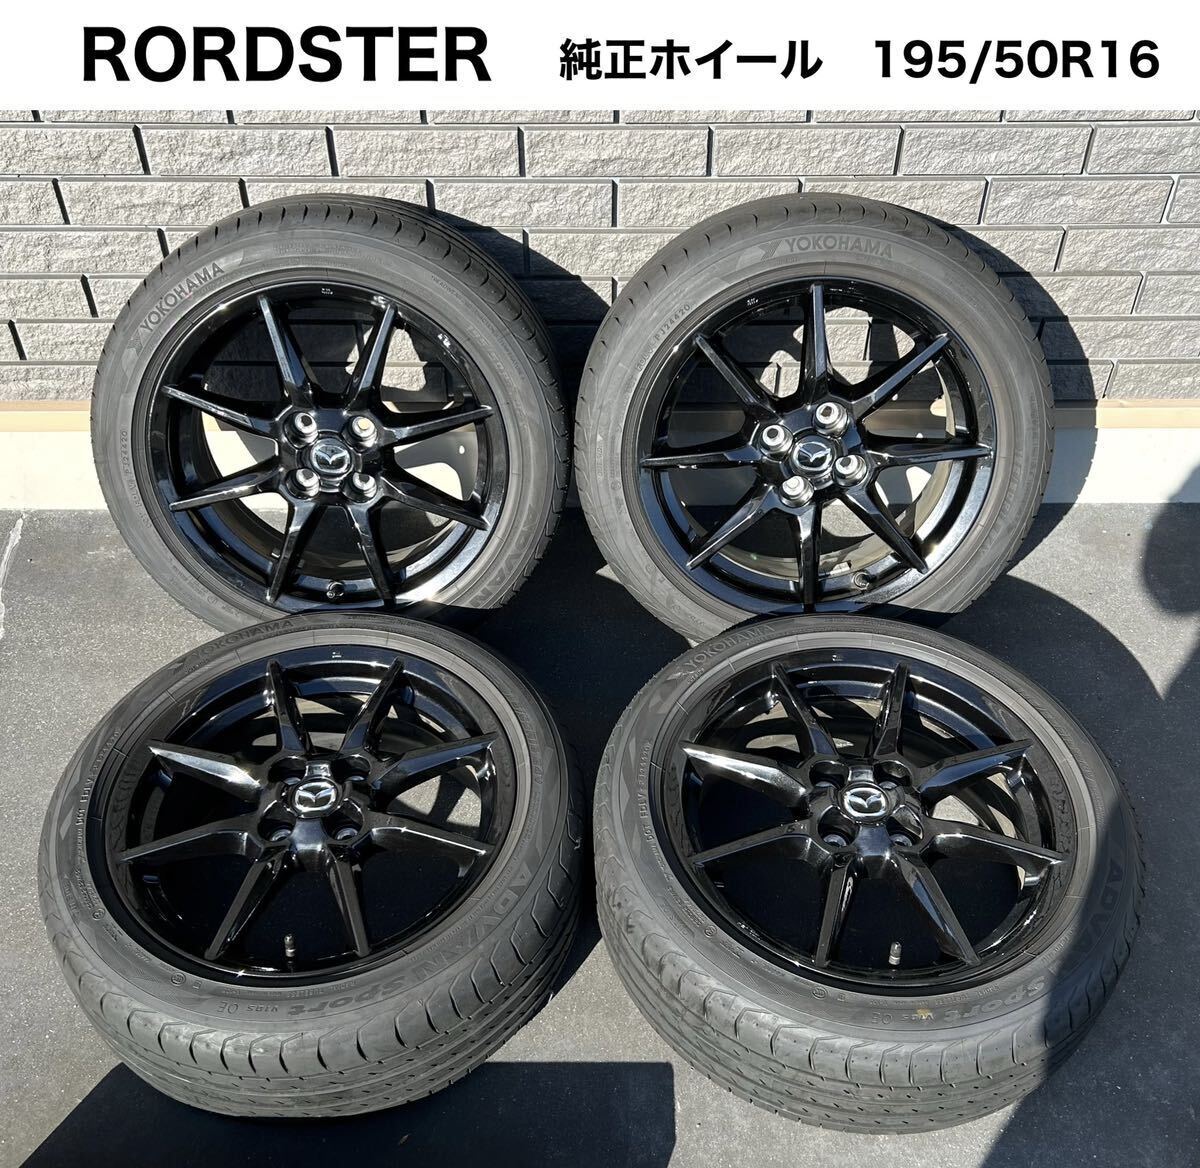 JDM Roadster genuine wheel 195/50R16 No Tires